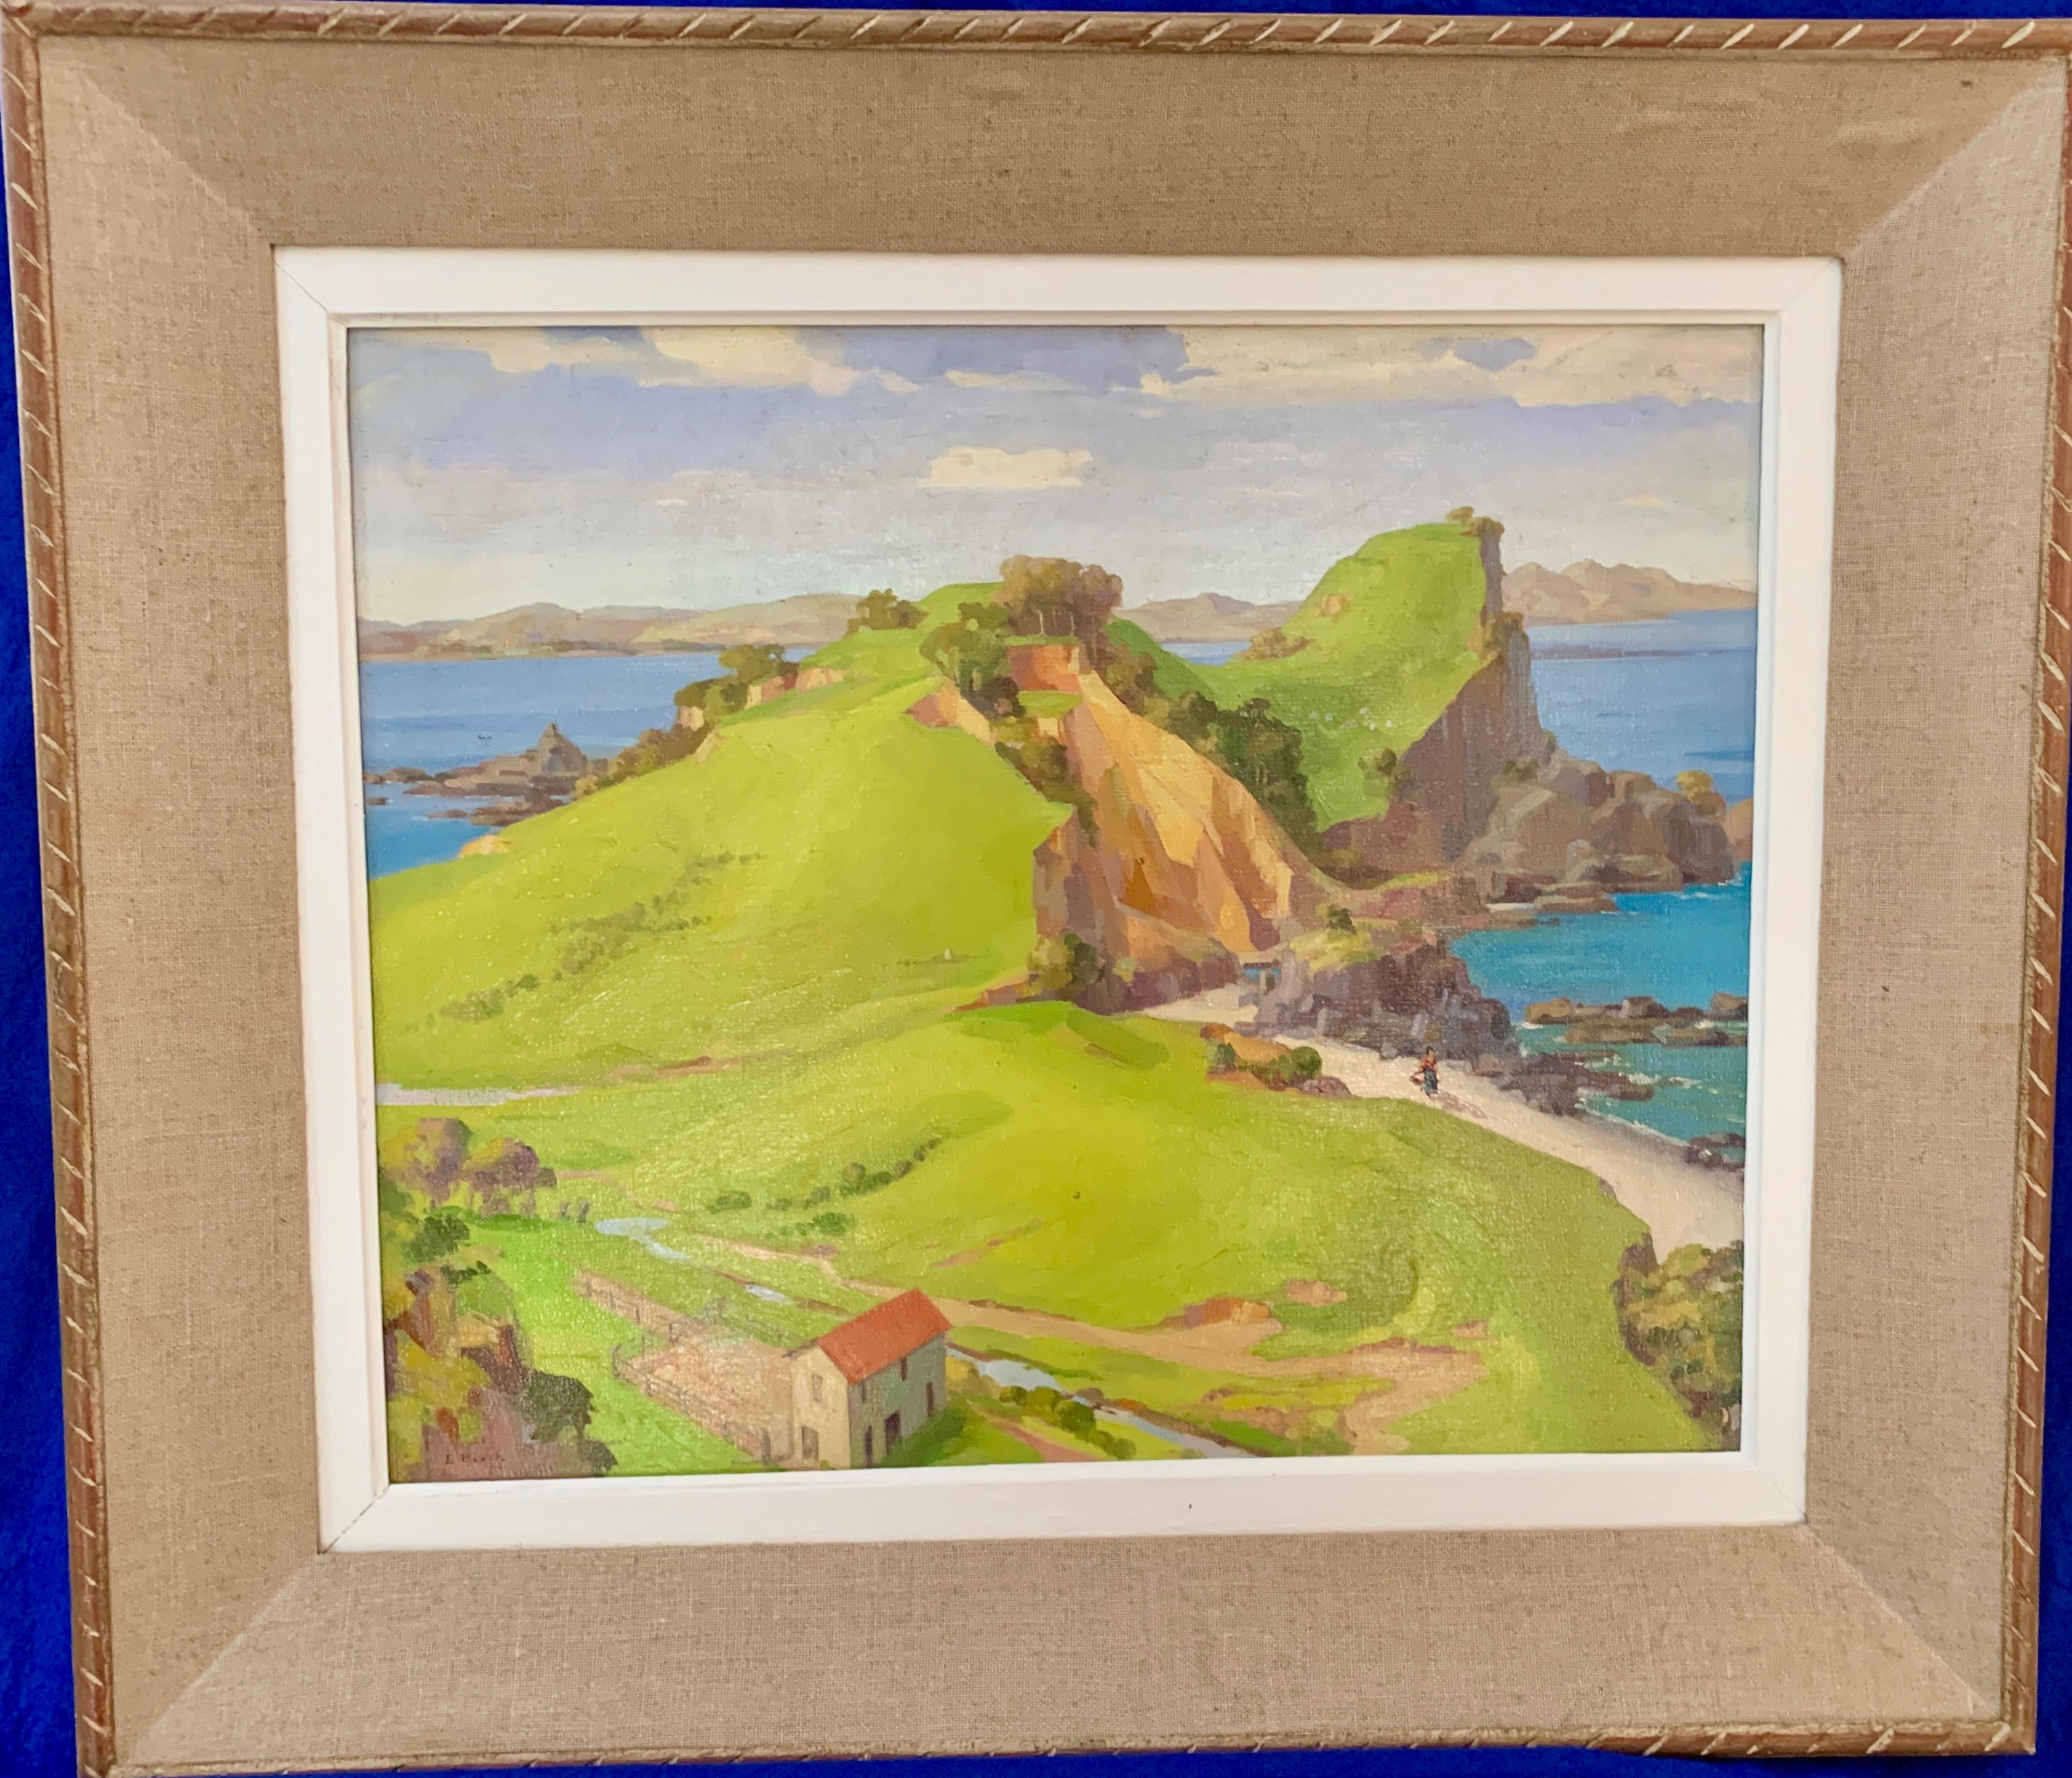 Lionel Birch Landscape Painting - Early 20th century Coastal English Impressionist scene